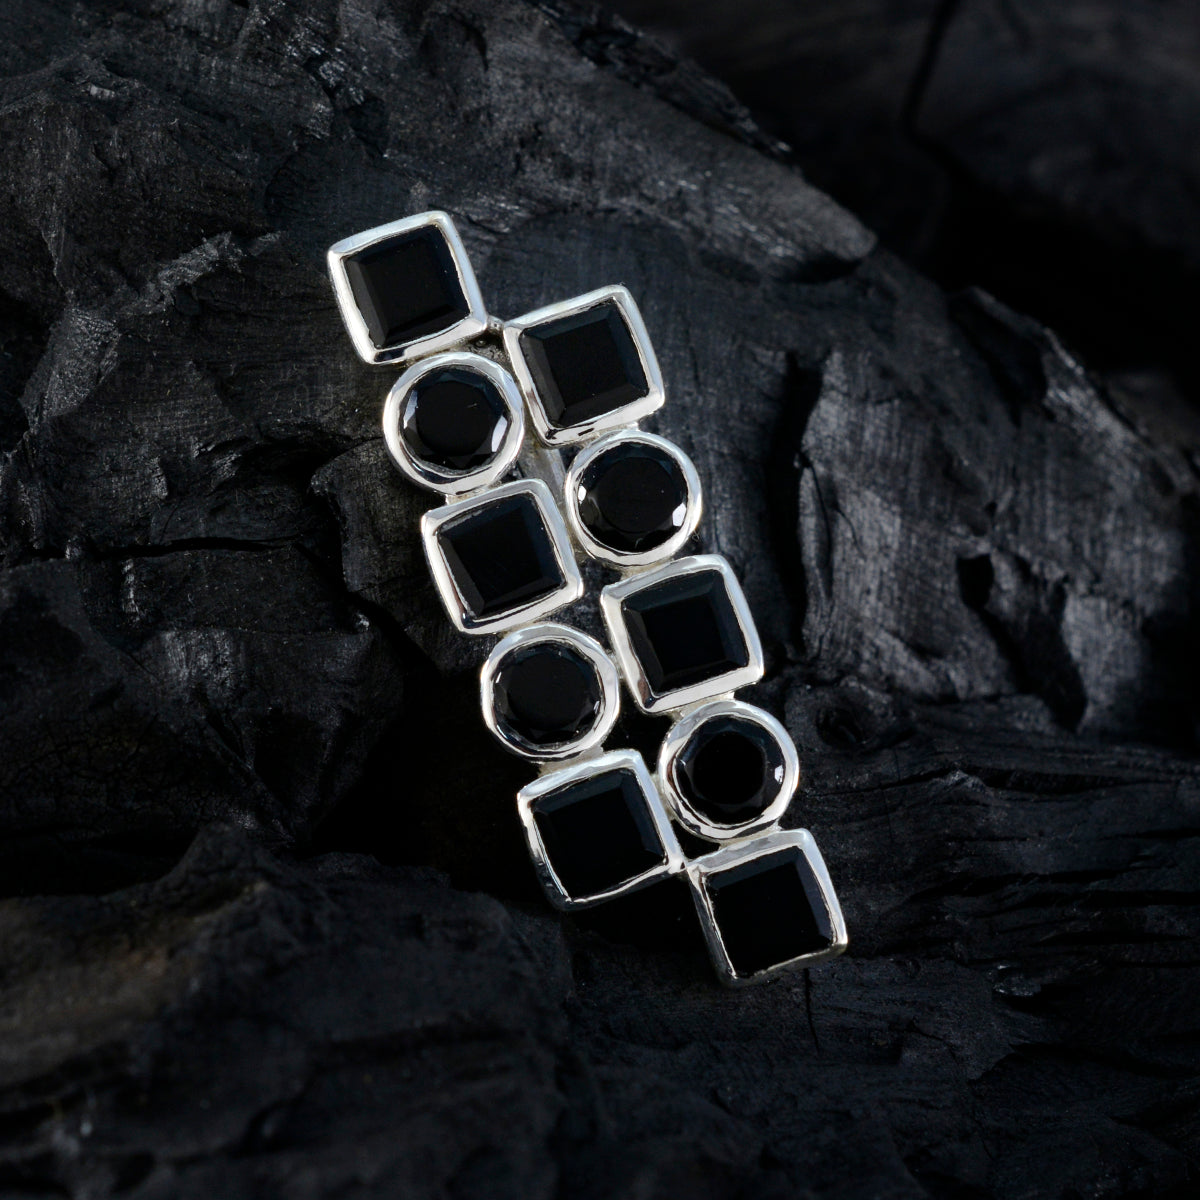 Riyo Beauteous Gemstone Multi Faceted Black Black Onyx Sterling Silver Pendant Gift For Christmas